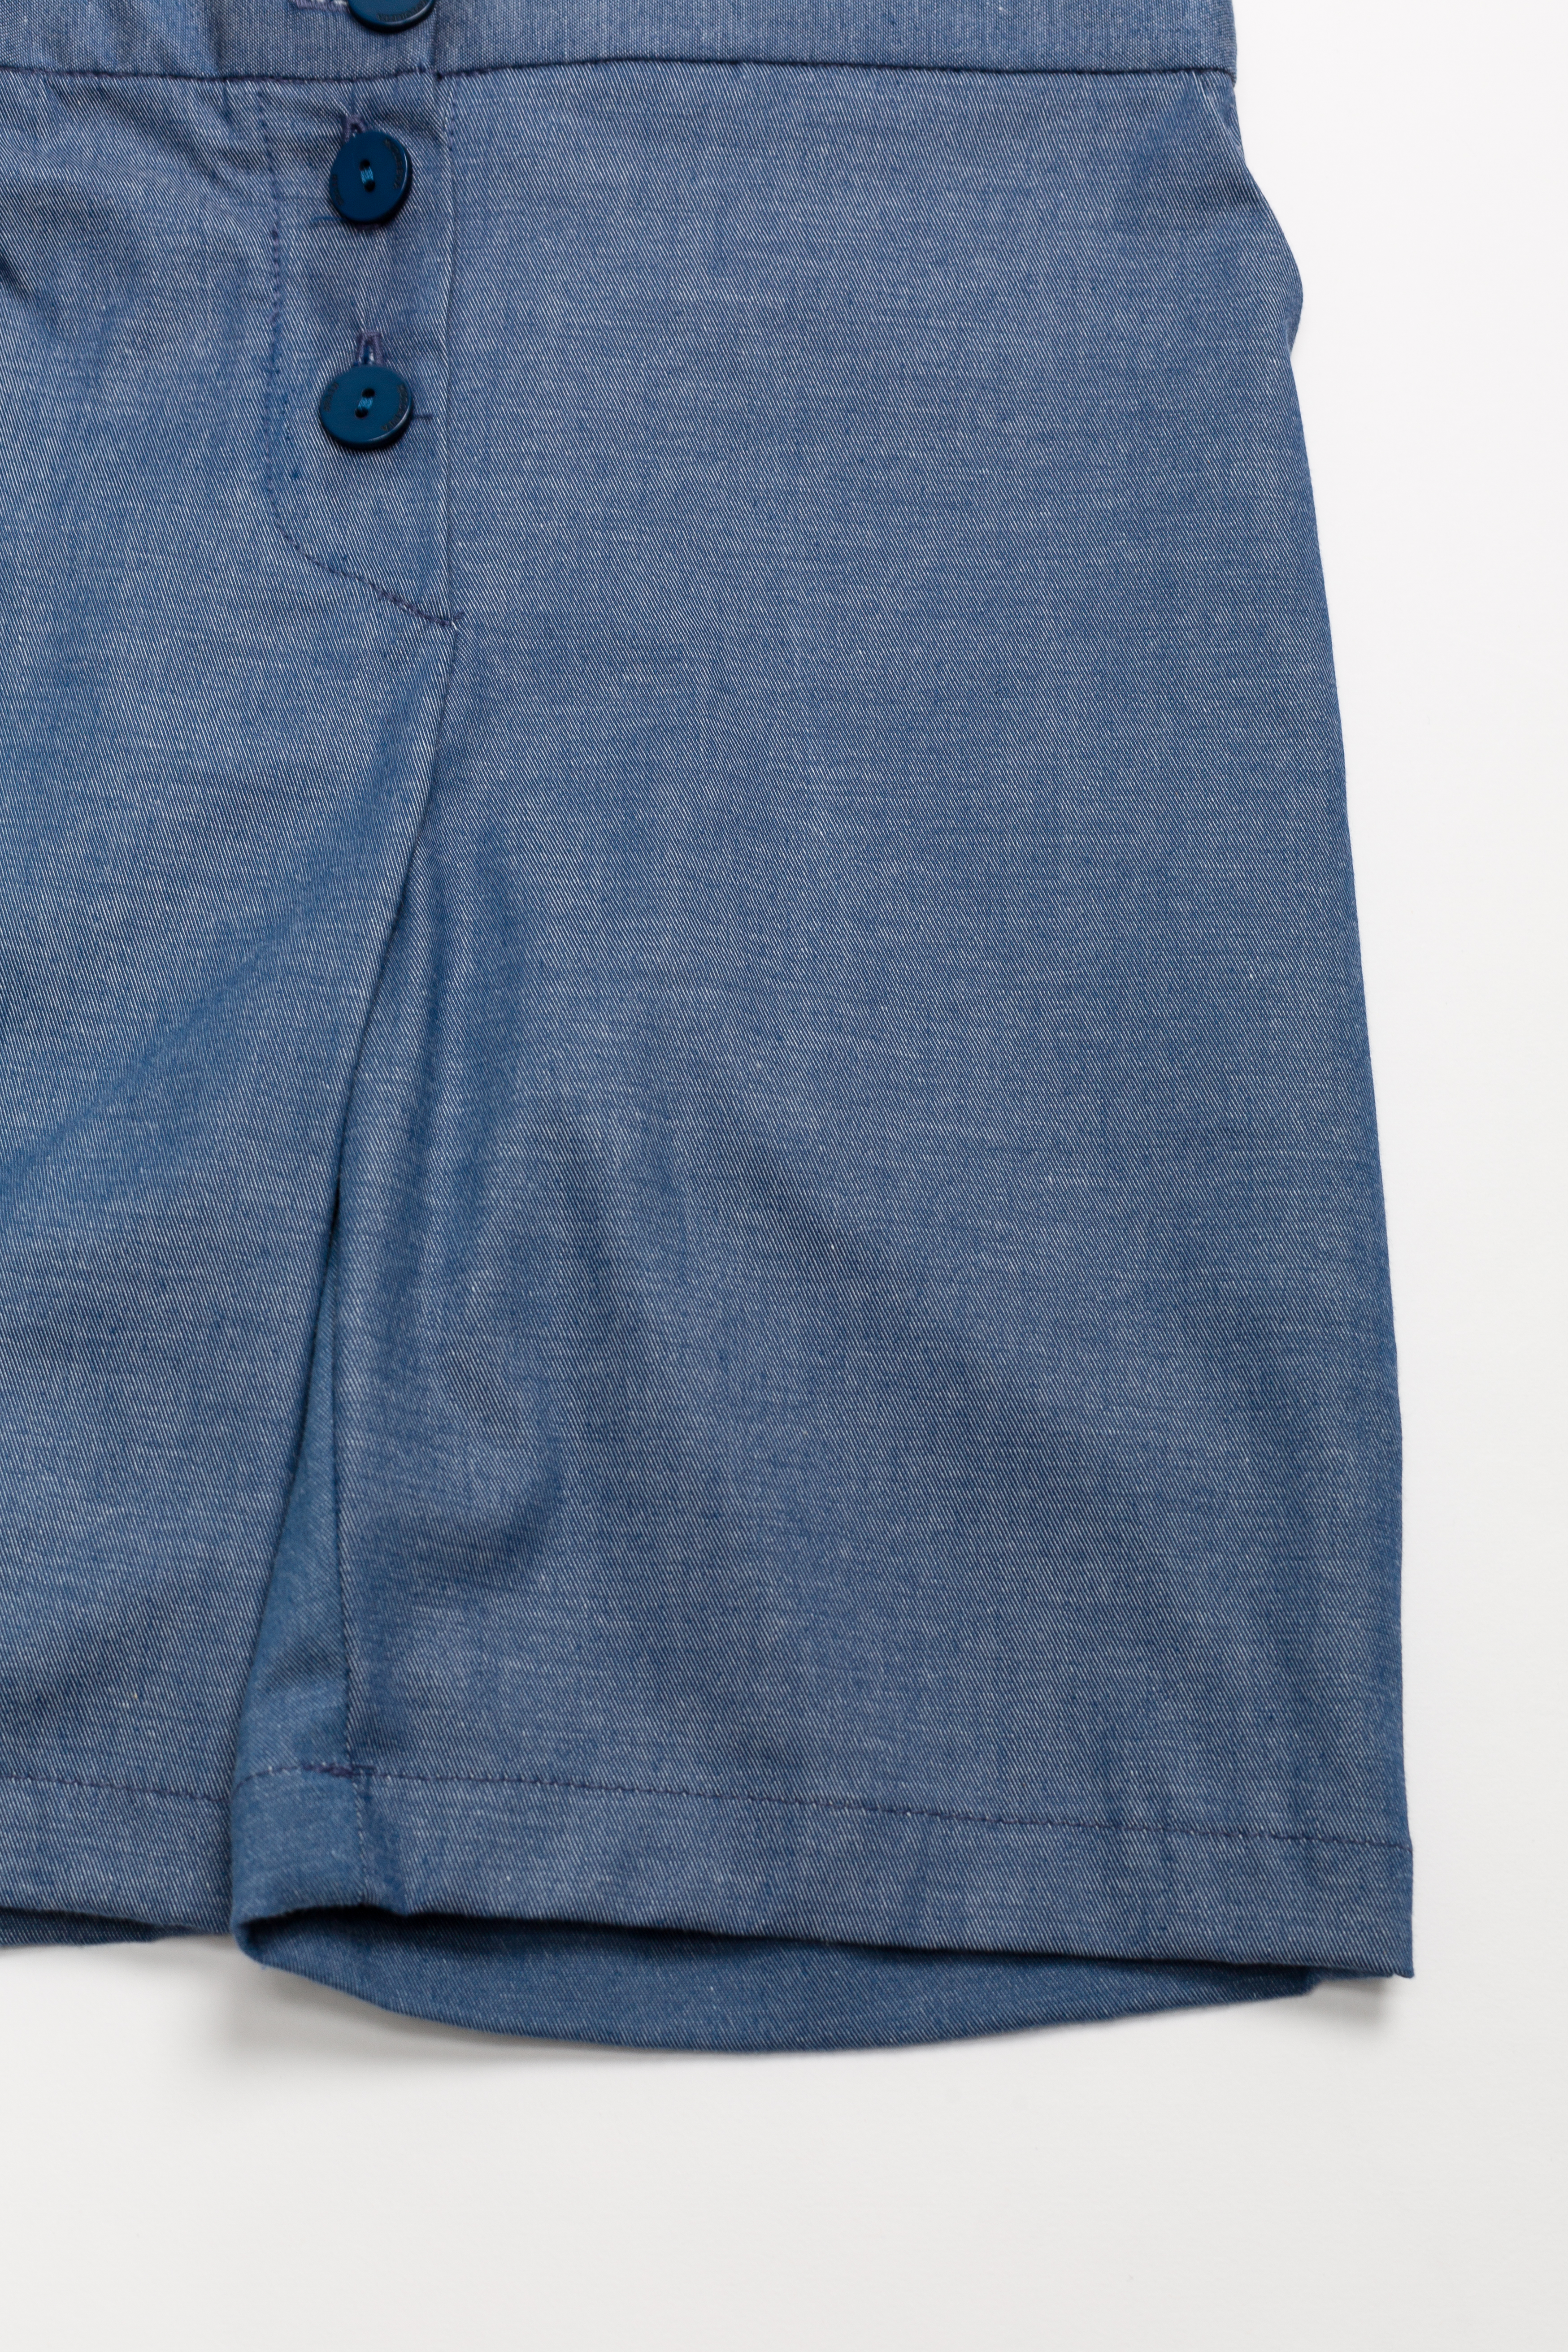                                                                                                                                              Pocket shorts-Denim 